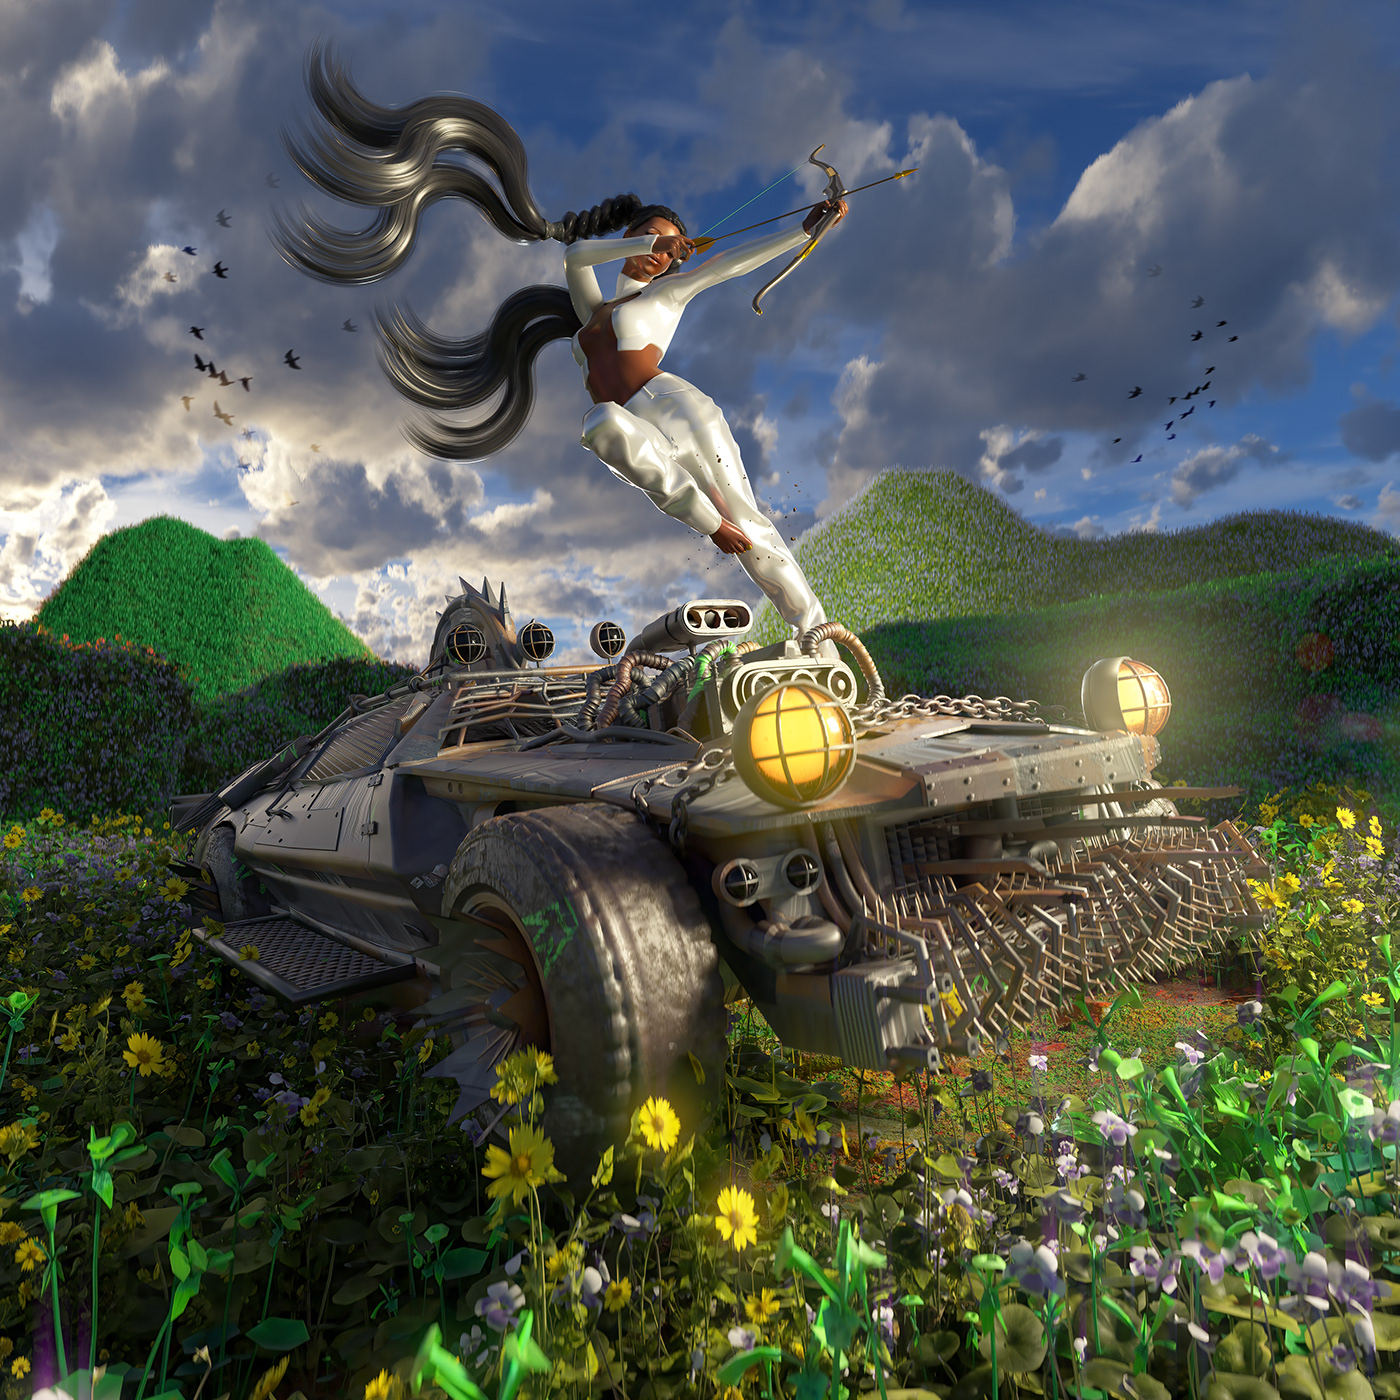 3d art album cover Environnement LYWW Mad Max oniric surreal tkay maidza